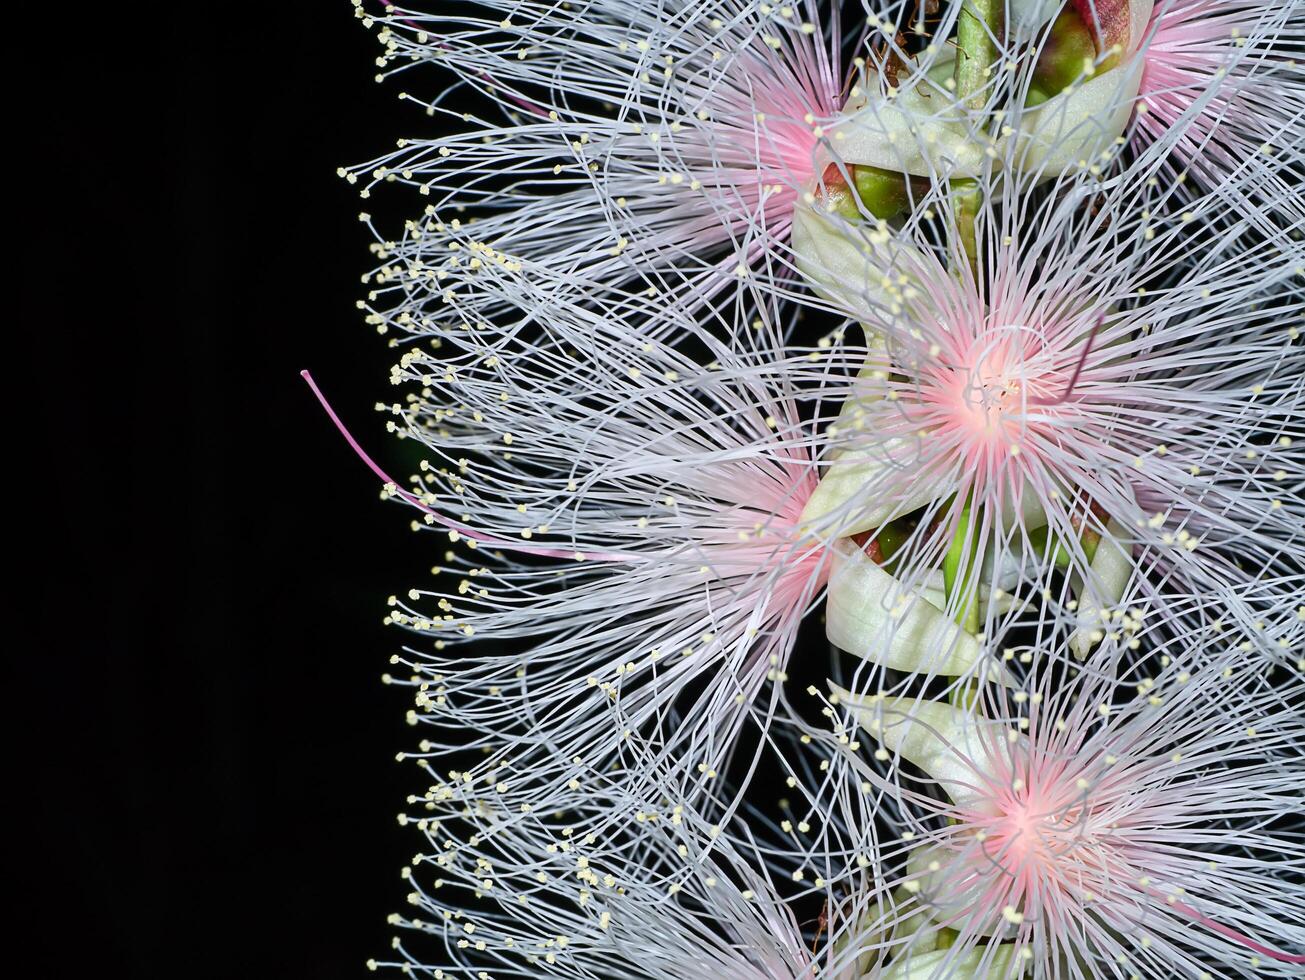 Close up of Baranda angatensis Llanos flower. photo